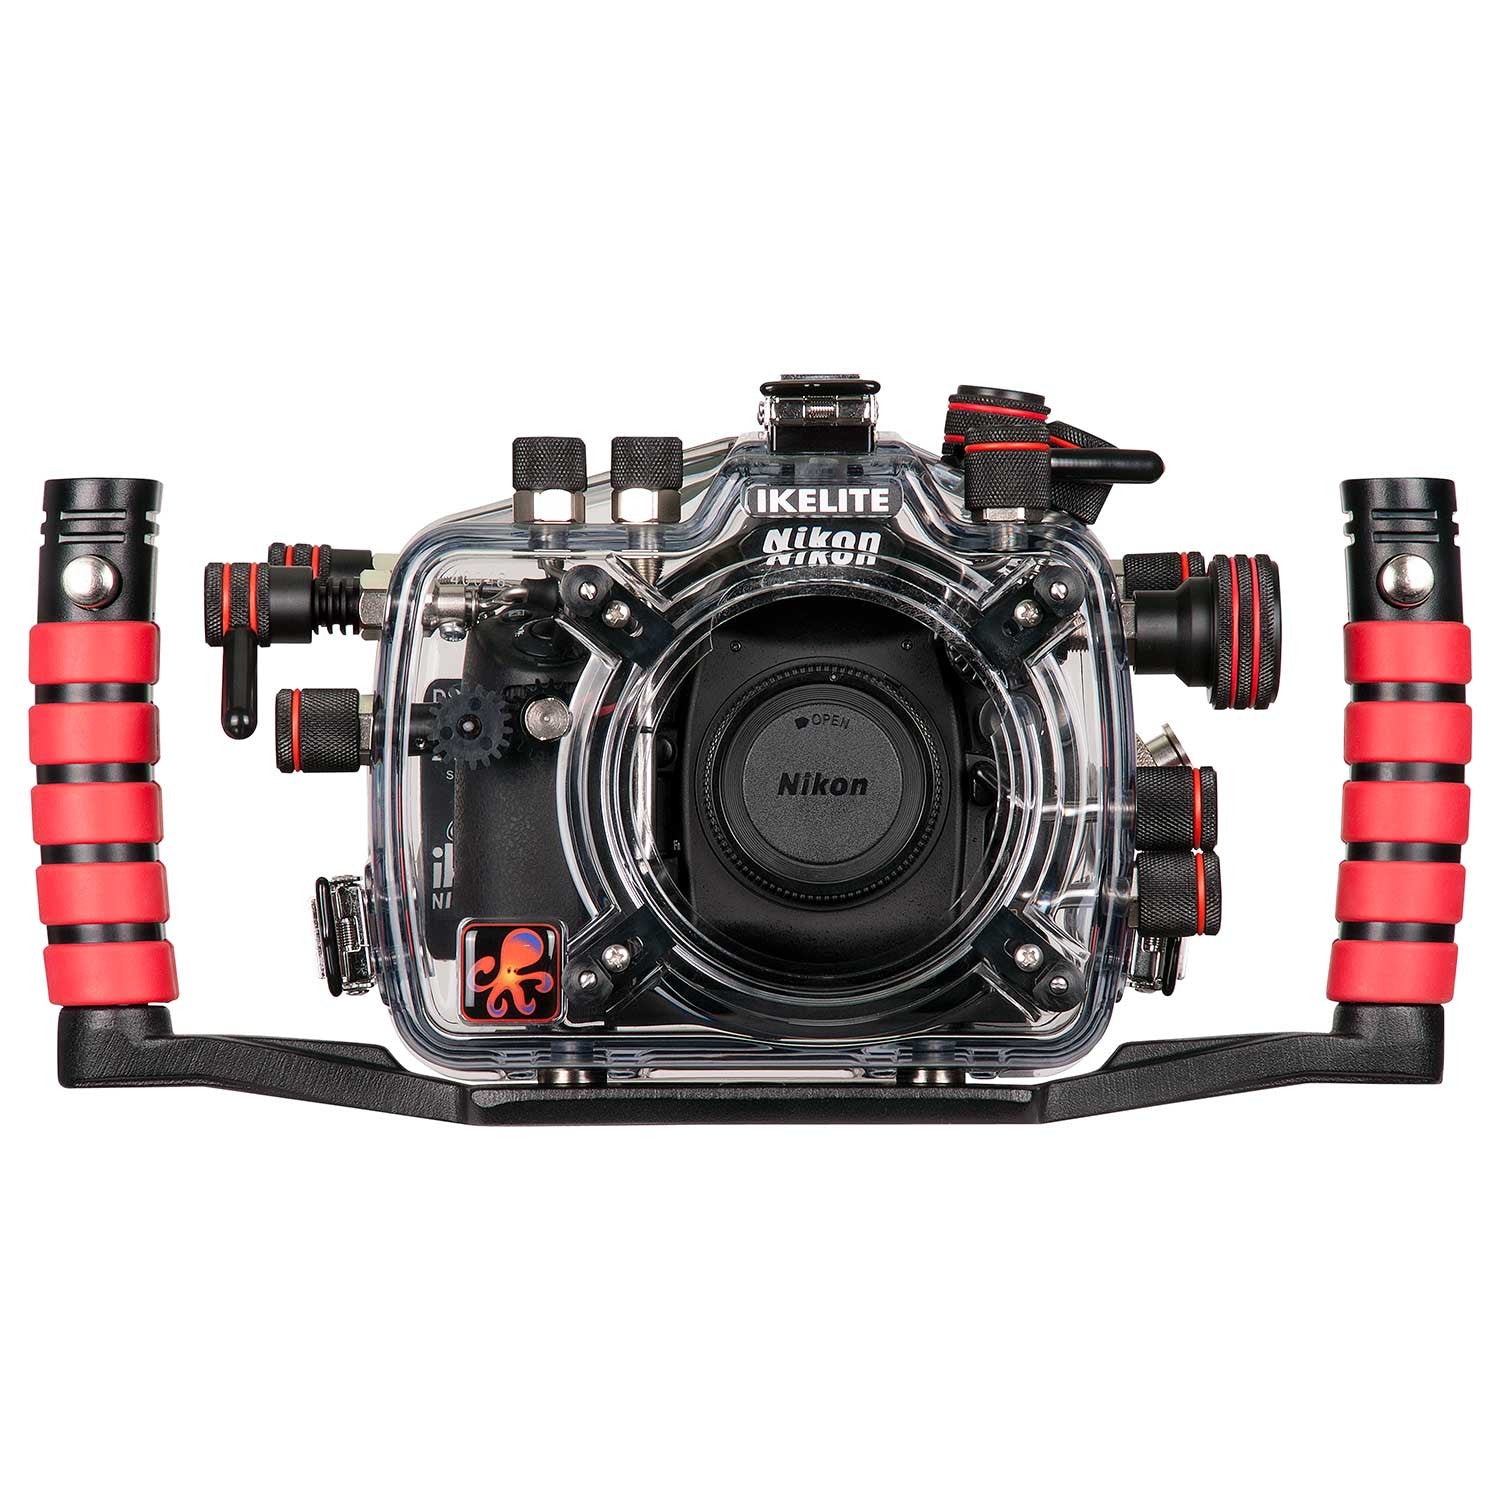 200FL Underwater TTL Housing for Nikon D700 DSLR Cameras